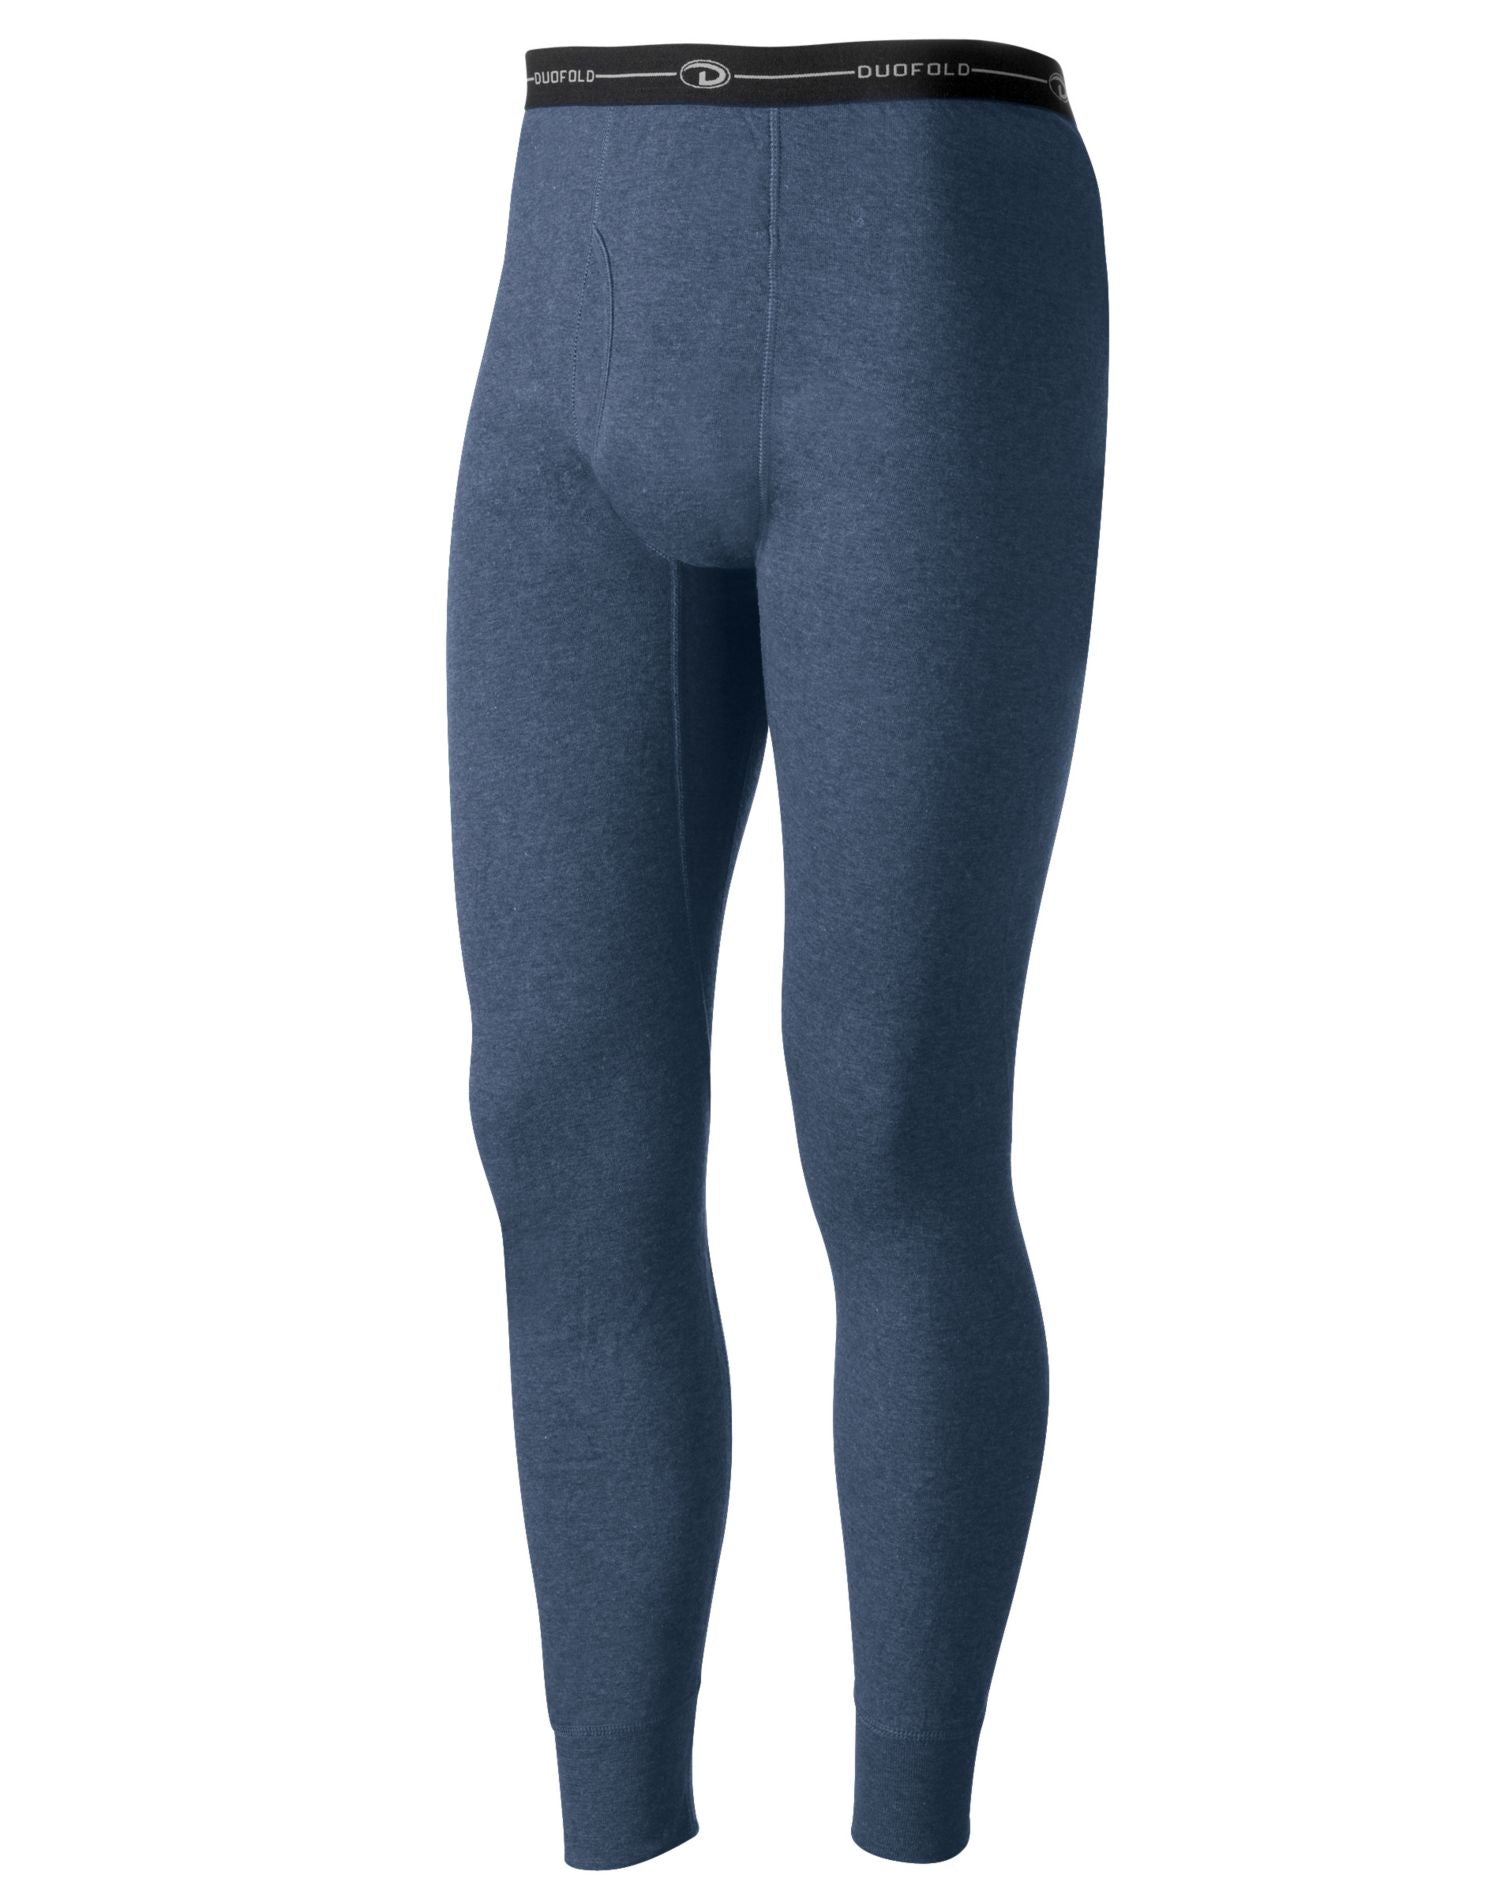 DUOFOLD Midweight Single-layer Thermal leggings